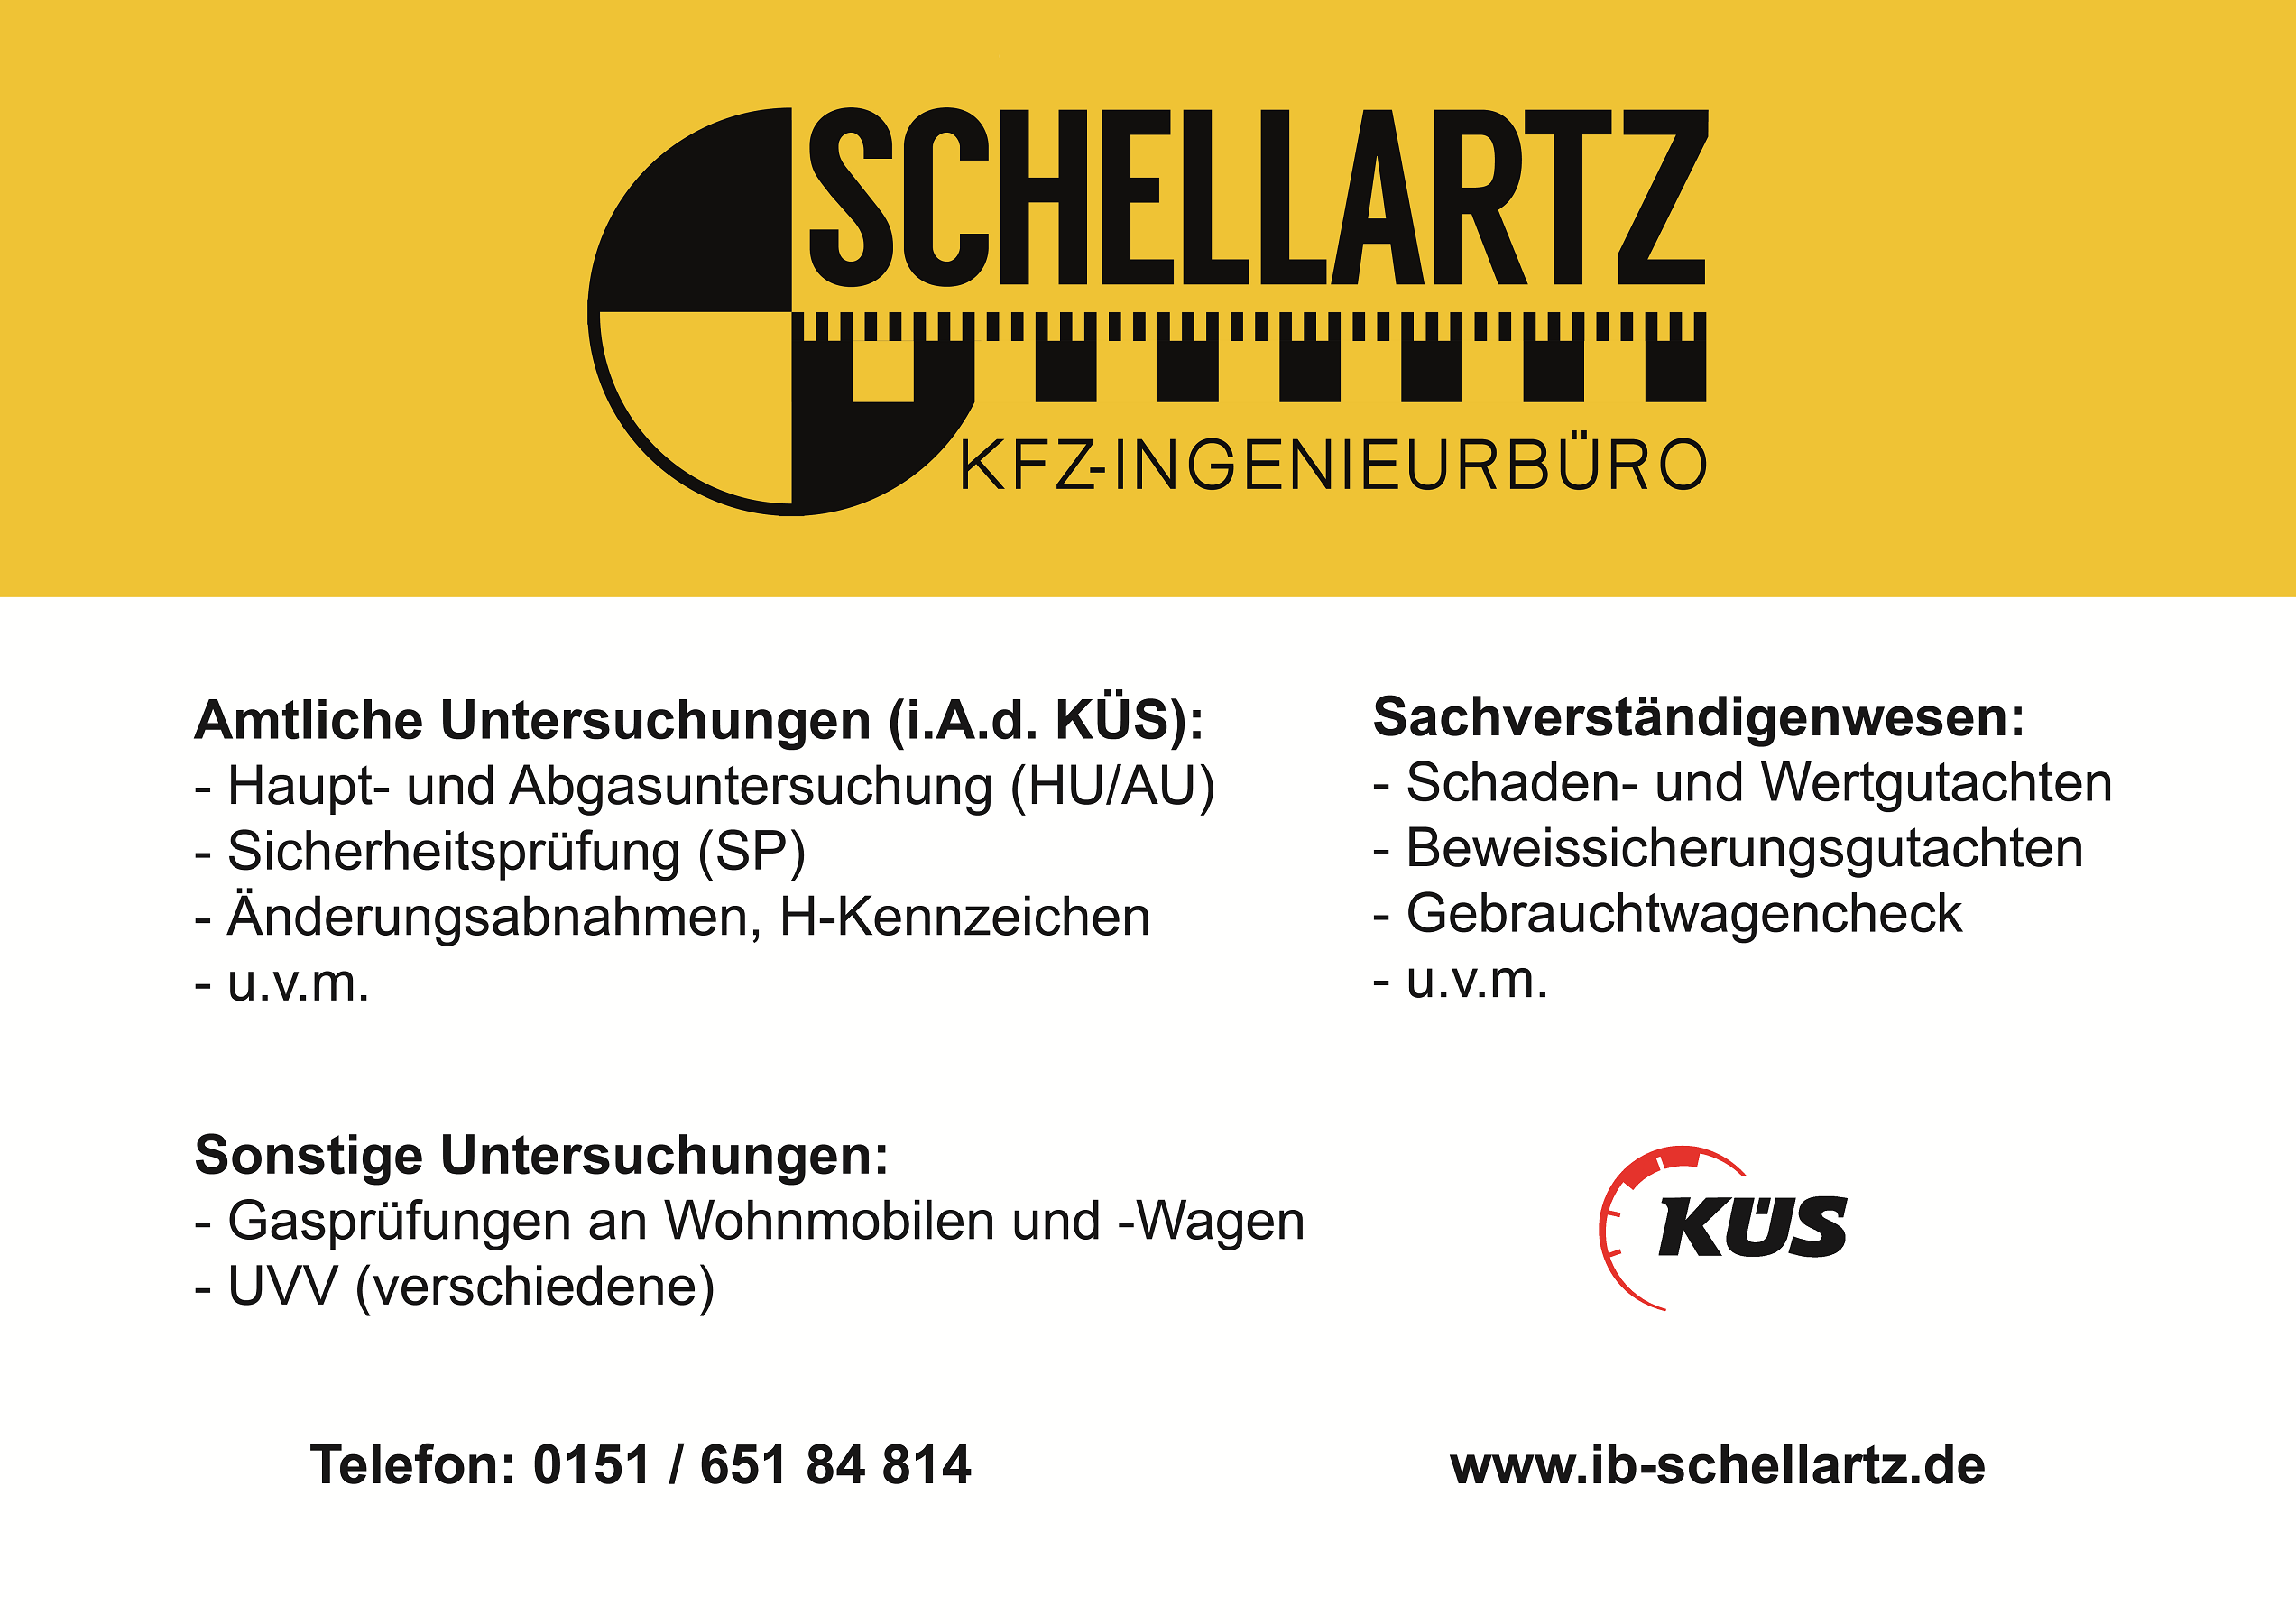 KFZ-Ingenieurbüro Schellartz